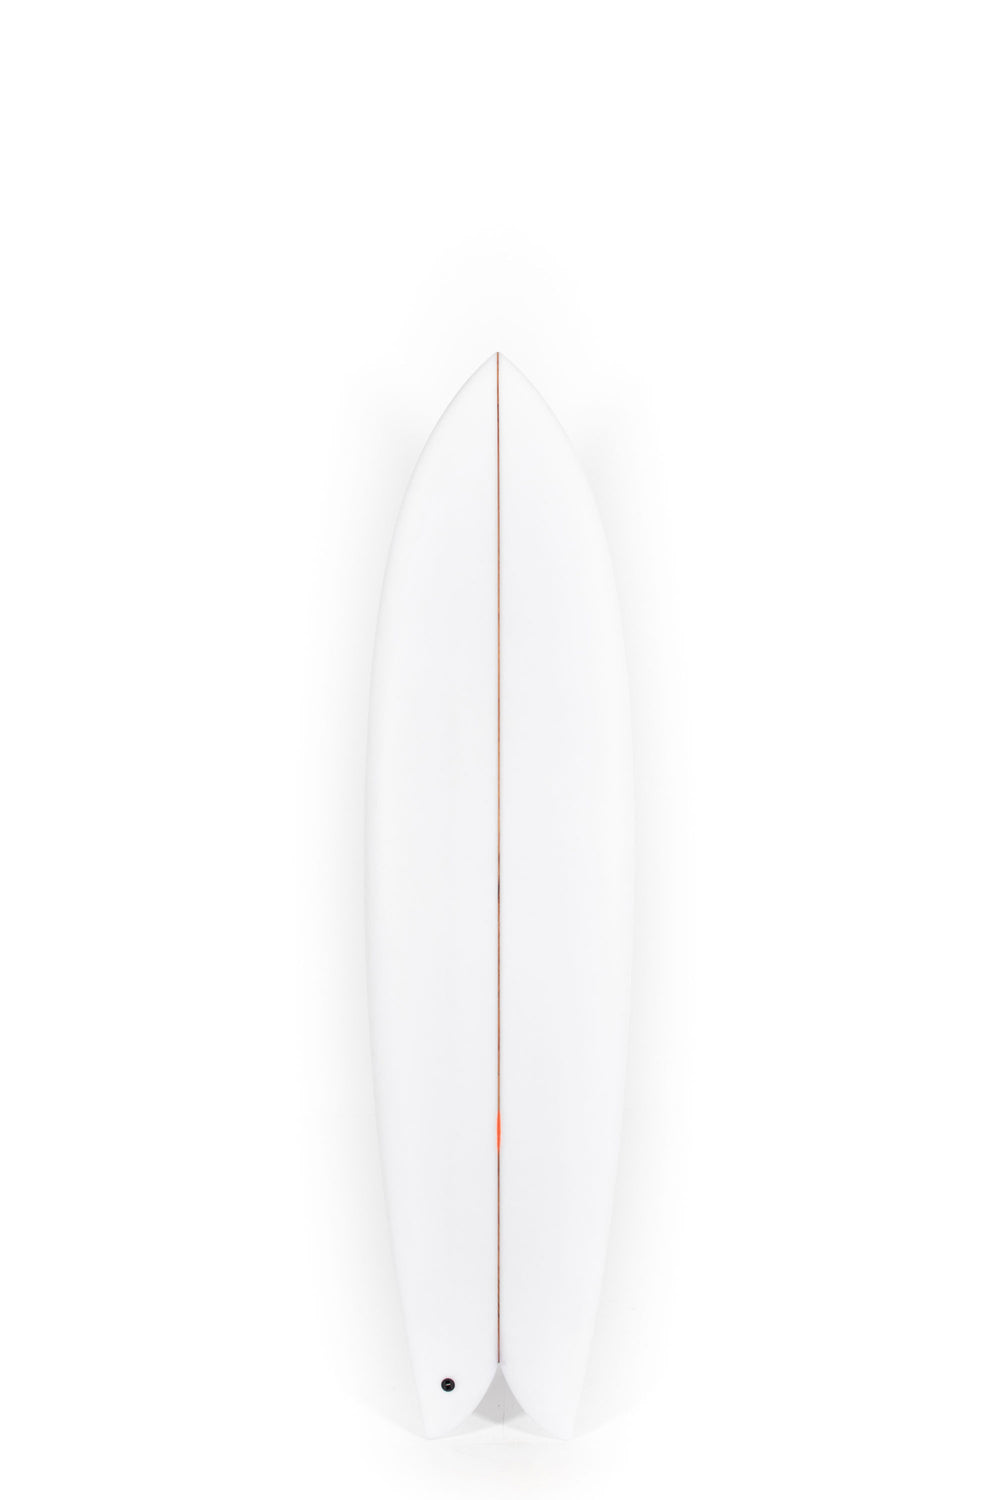 Pukas Surf Shop - Christenson Surfboards - LONG PHISH - 7'0